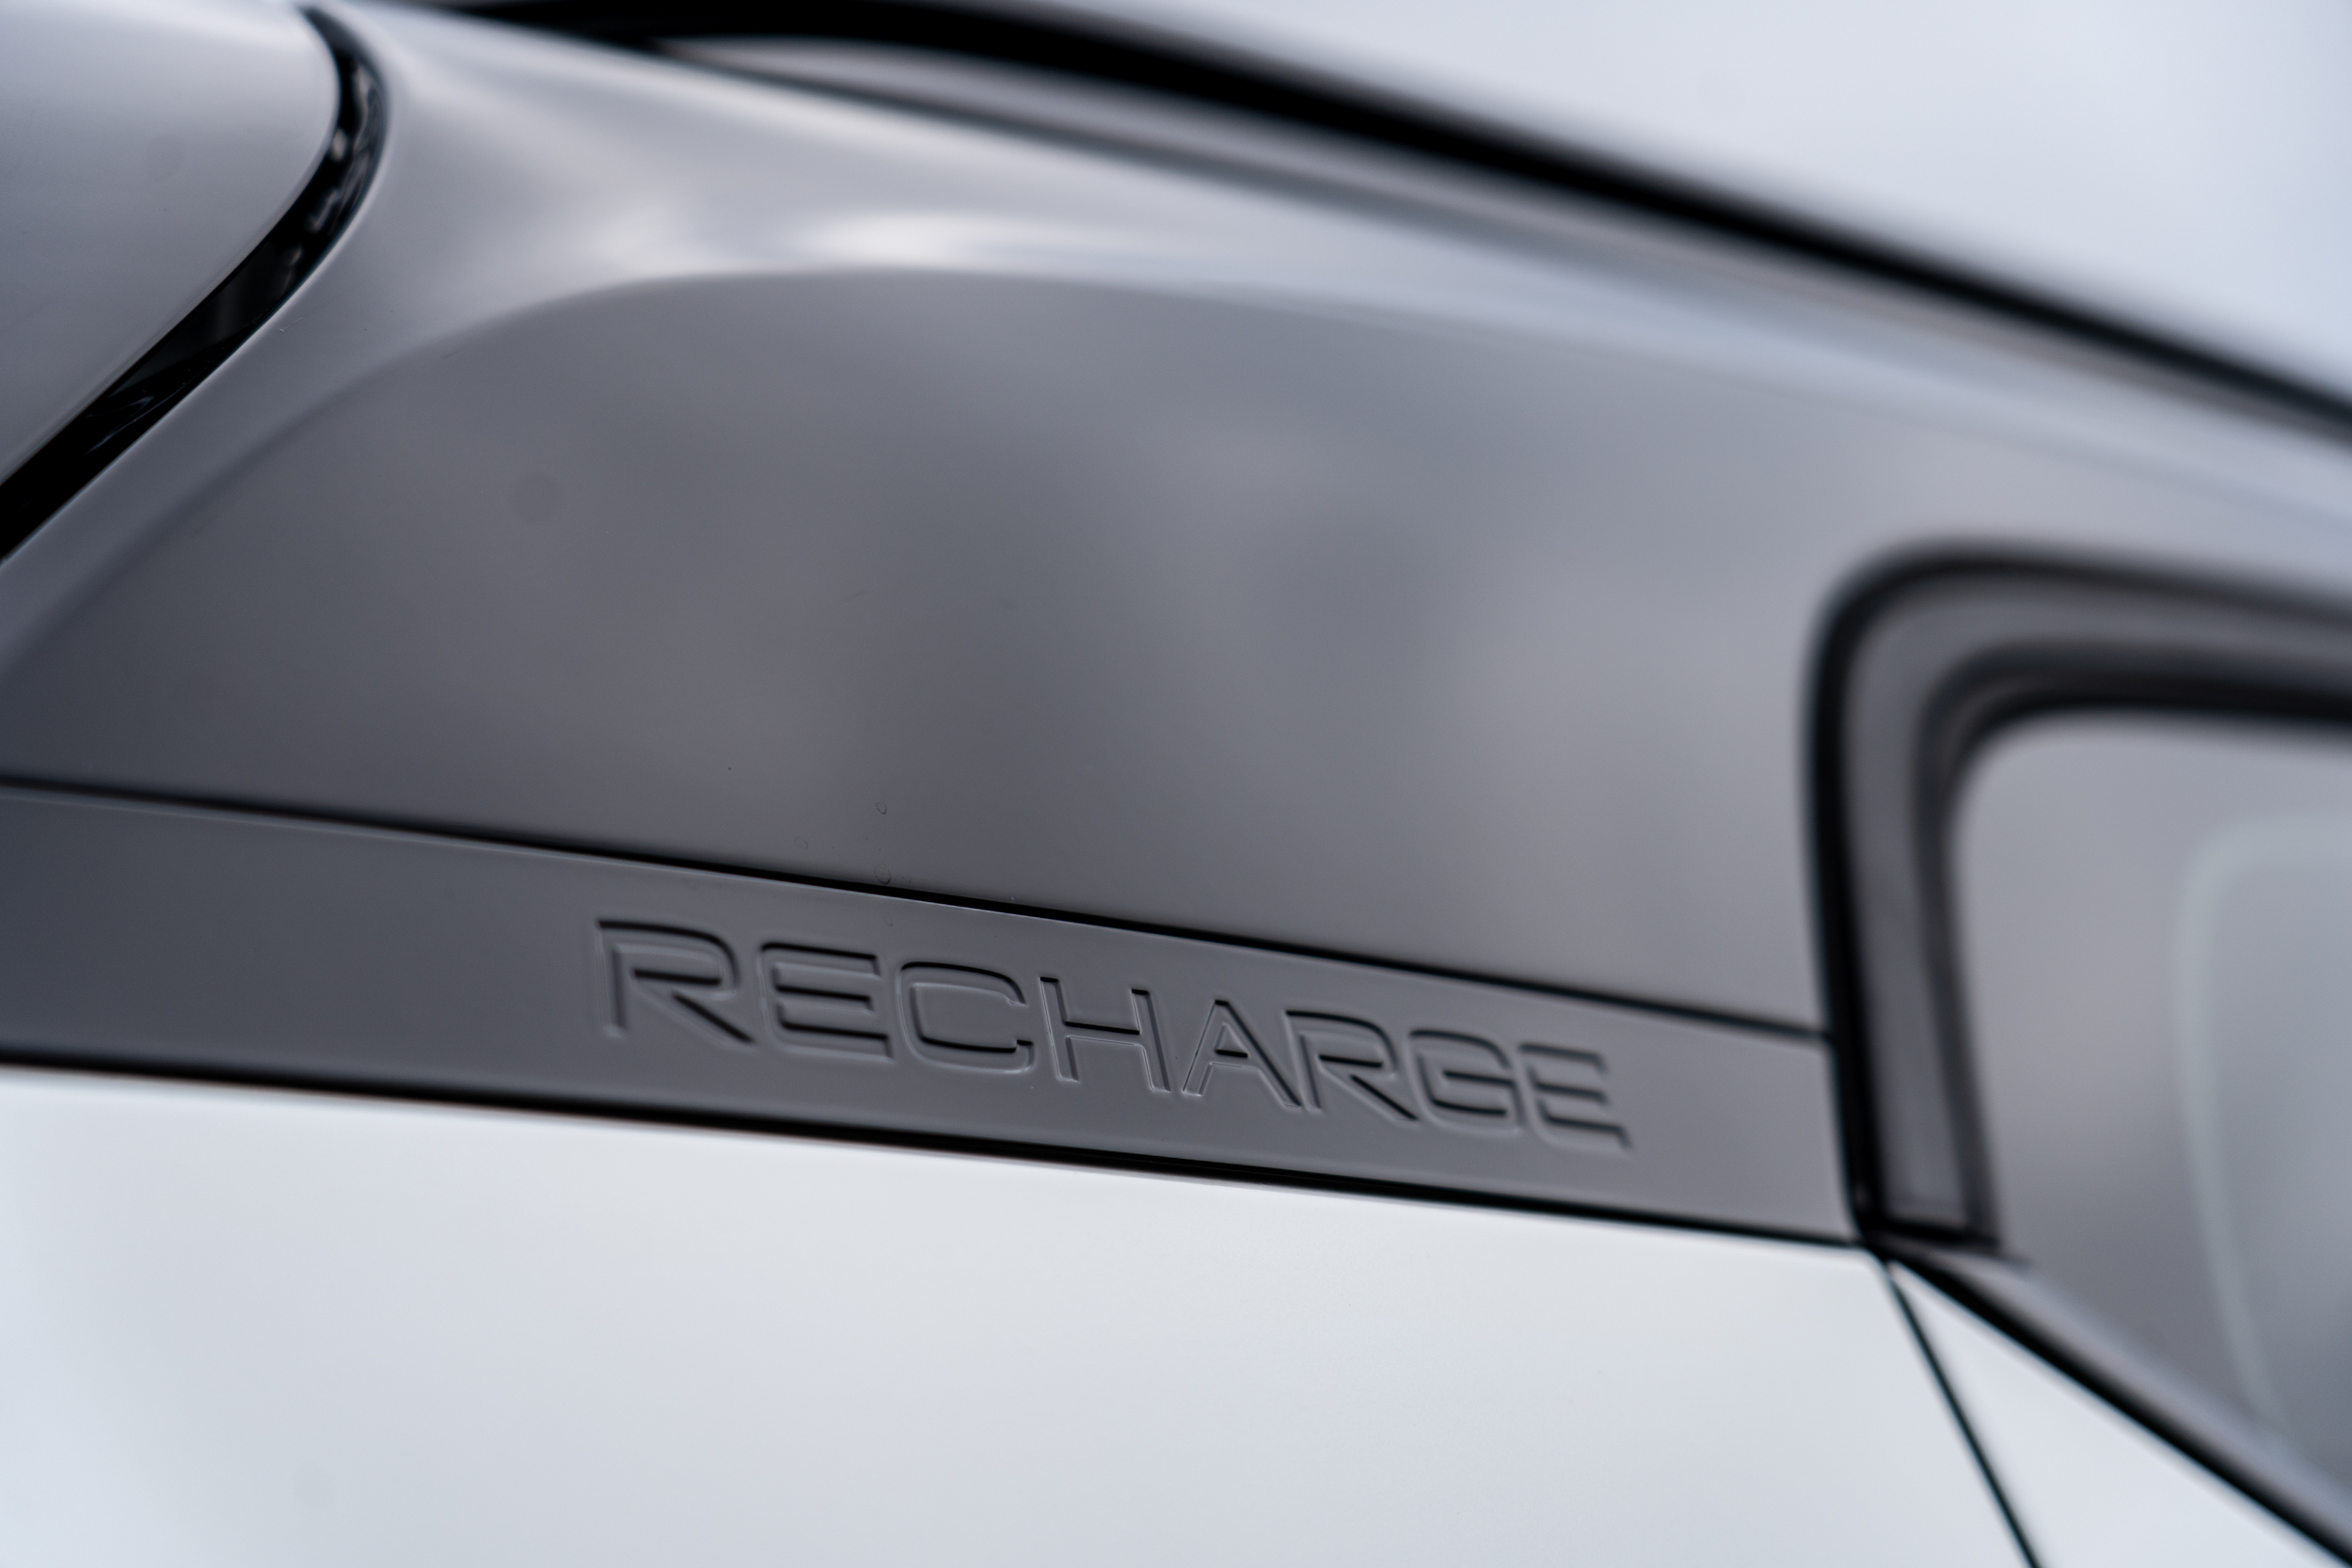 XC40 Recharge 與純內燃機車型有著相同的設計語言，僅從一些細節處做出改變，來凸顯電動車的特殊身份。